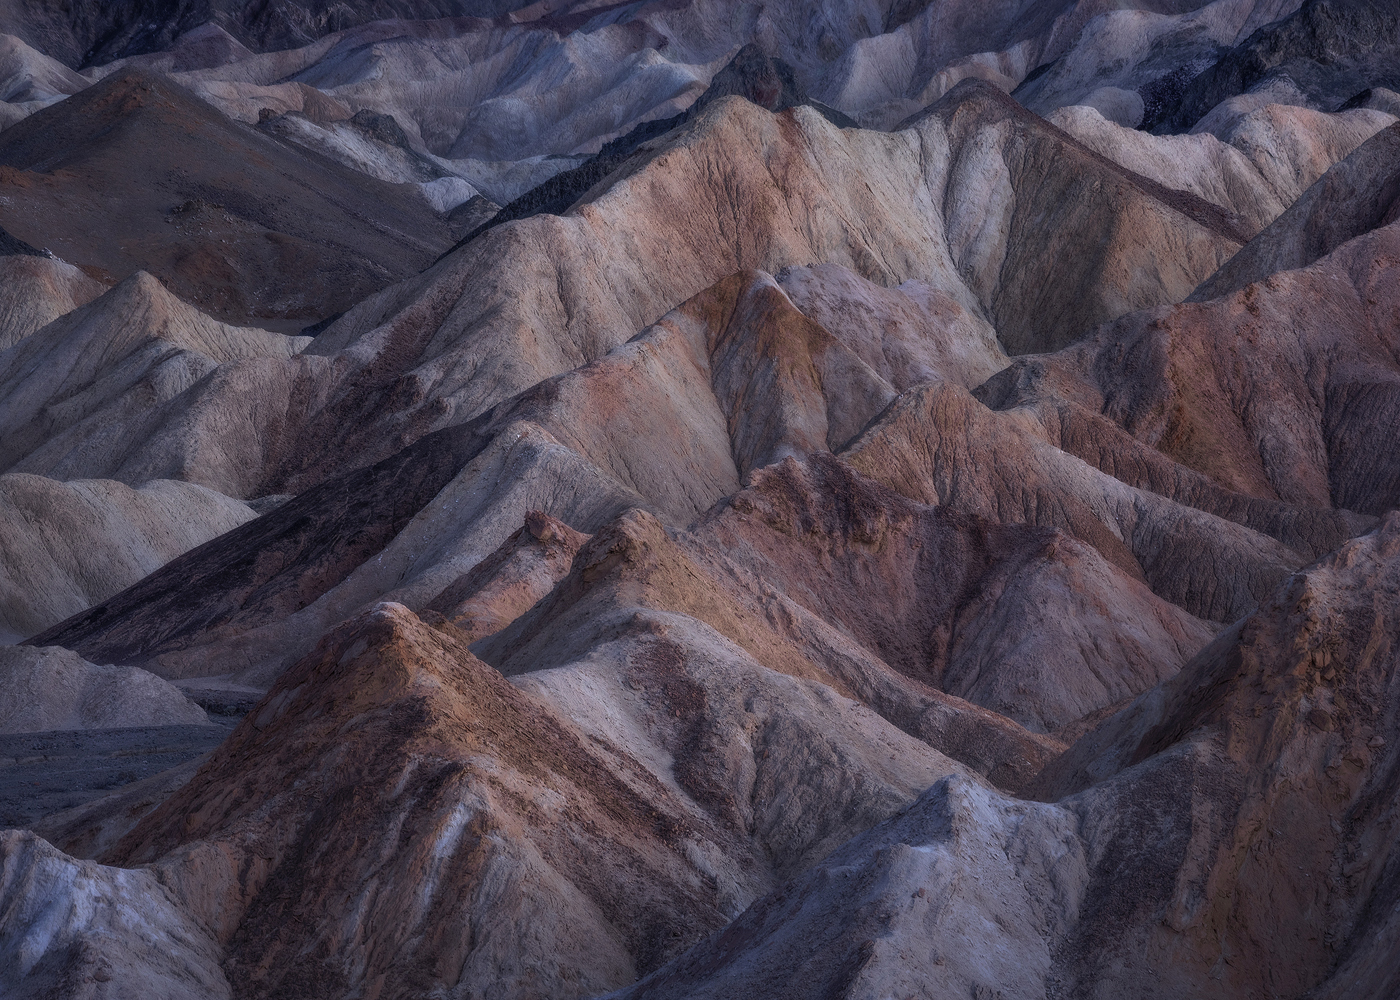 Death Valley National Park, Death Valley, DVNP, badlands